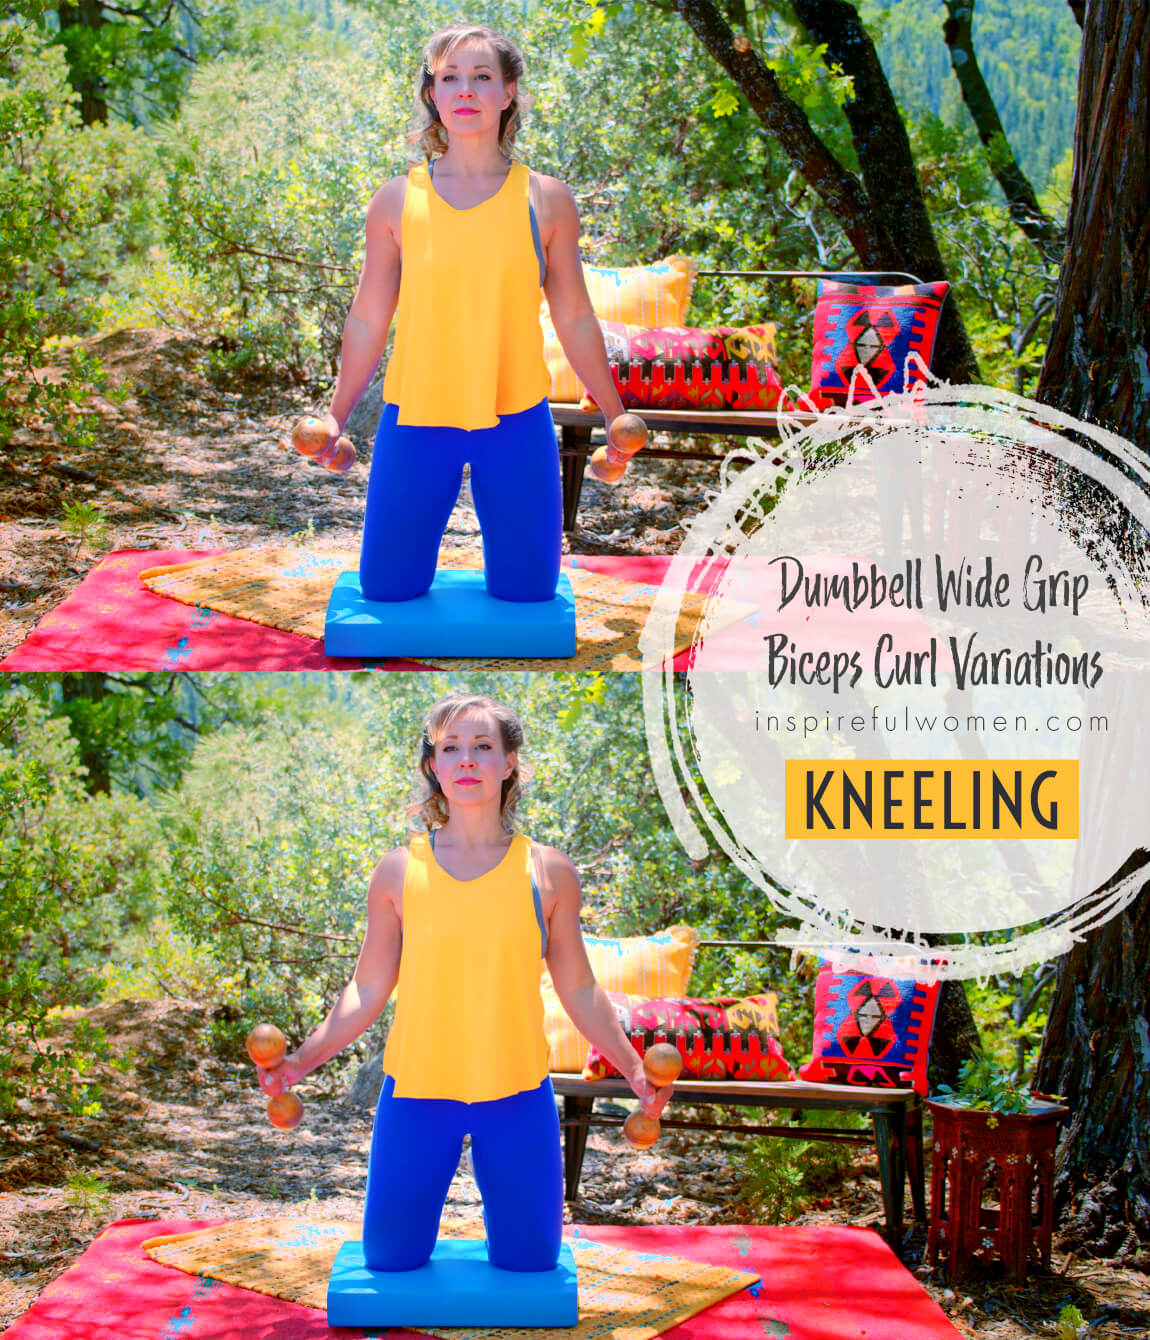 kneeling-wide-grip-bicep-curl-dumbbell-short-head-exercise-variation